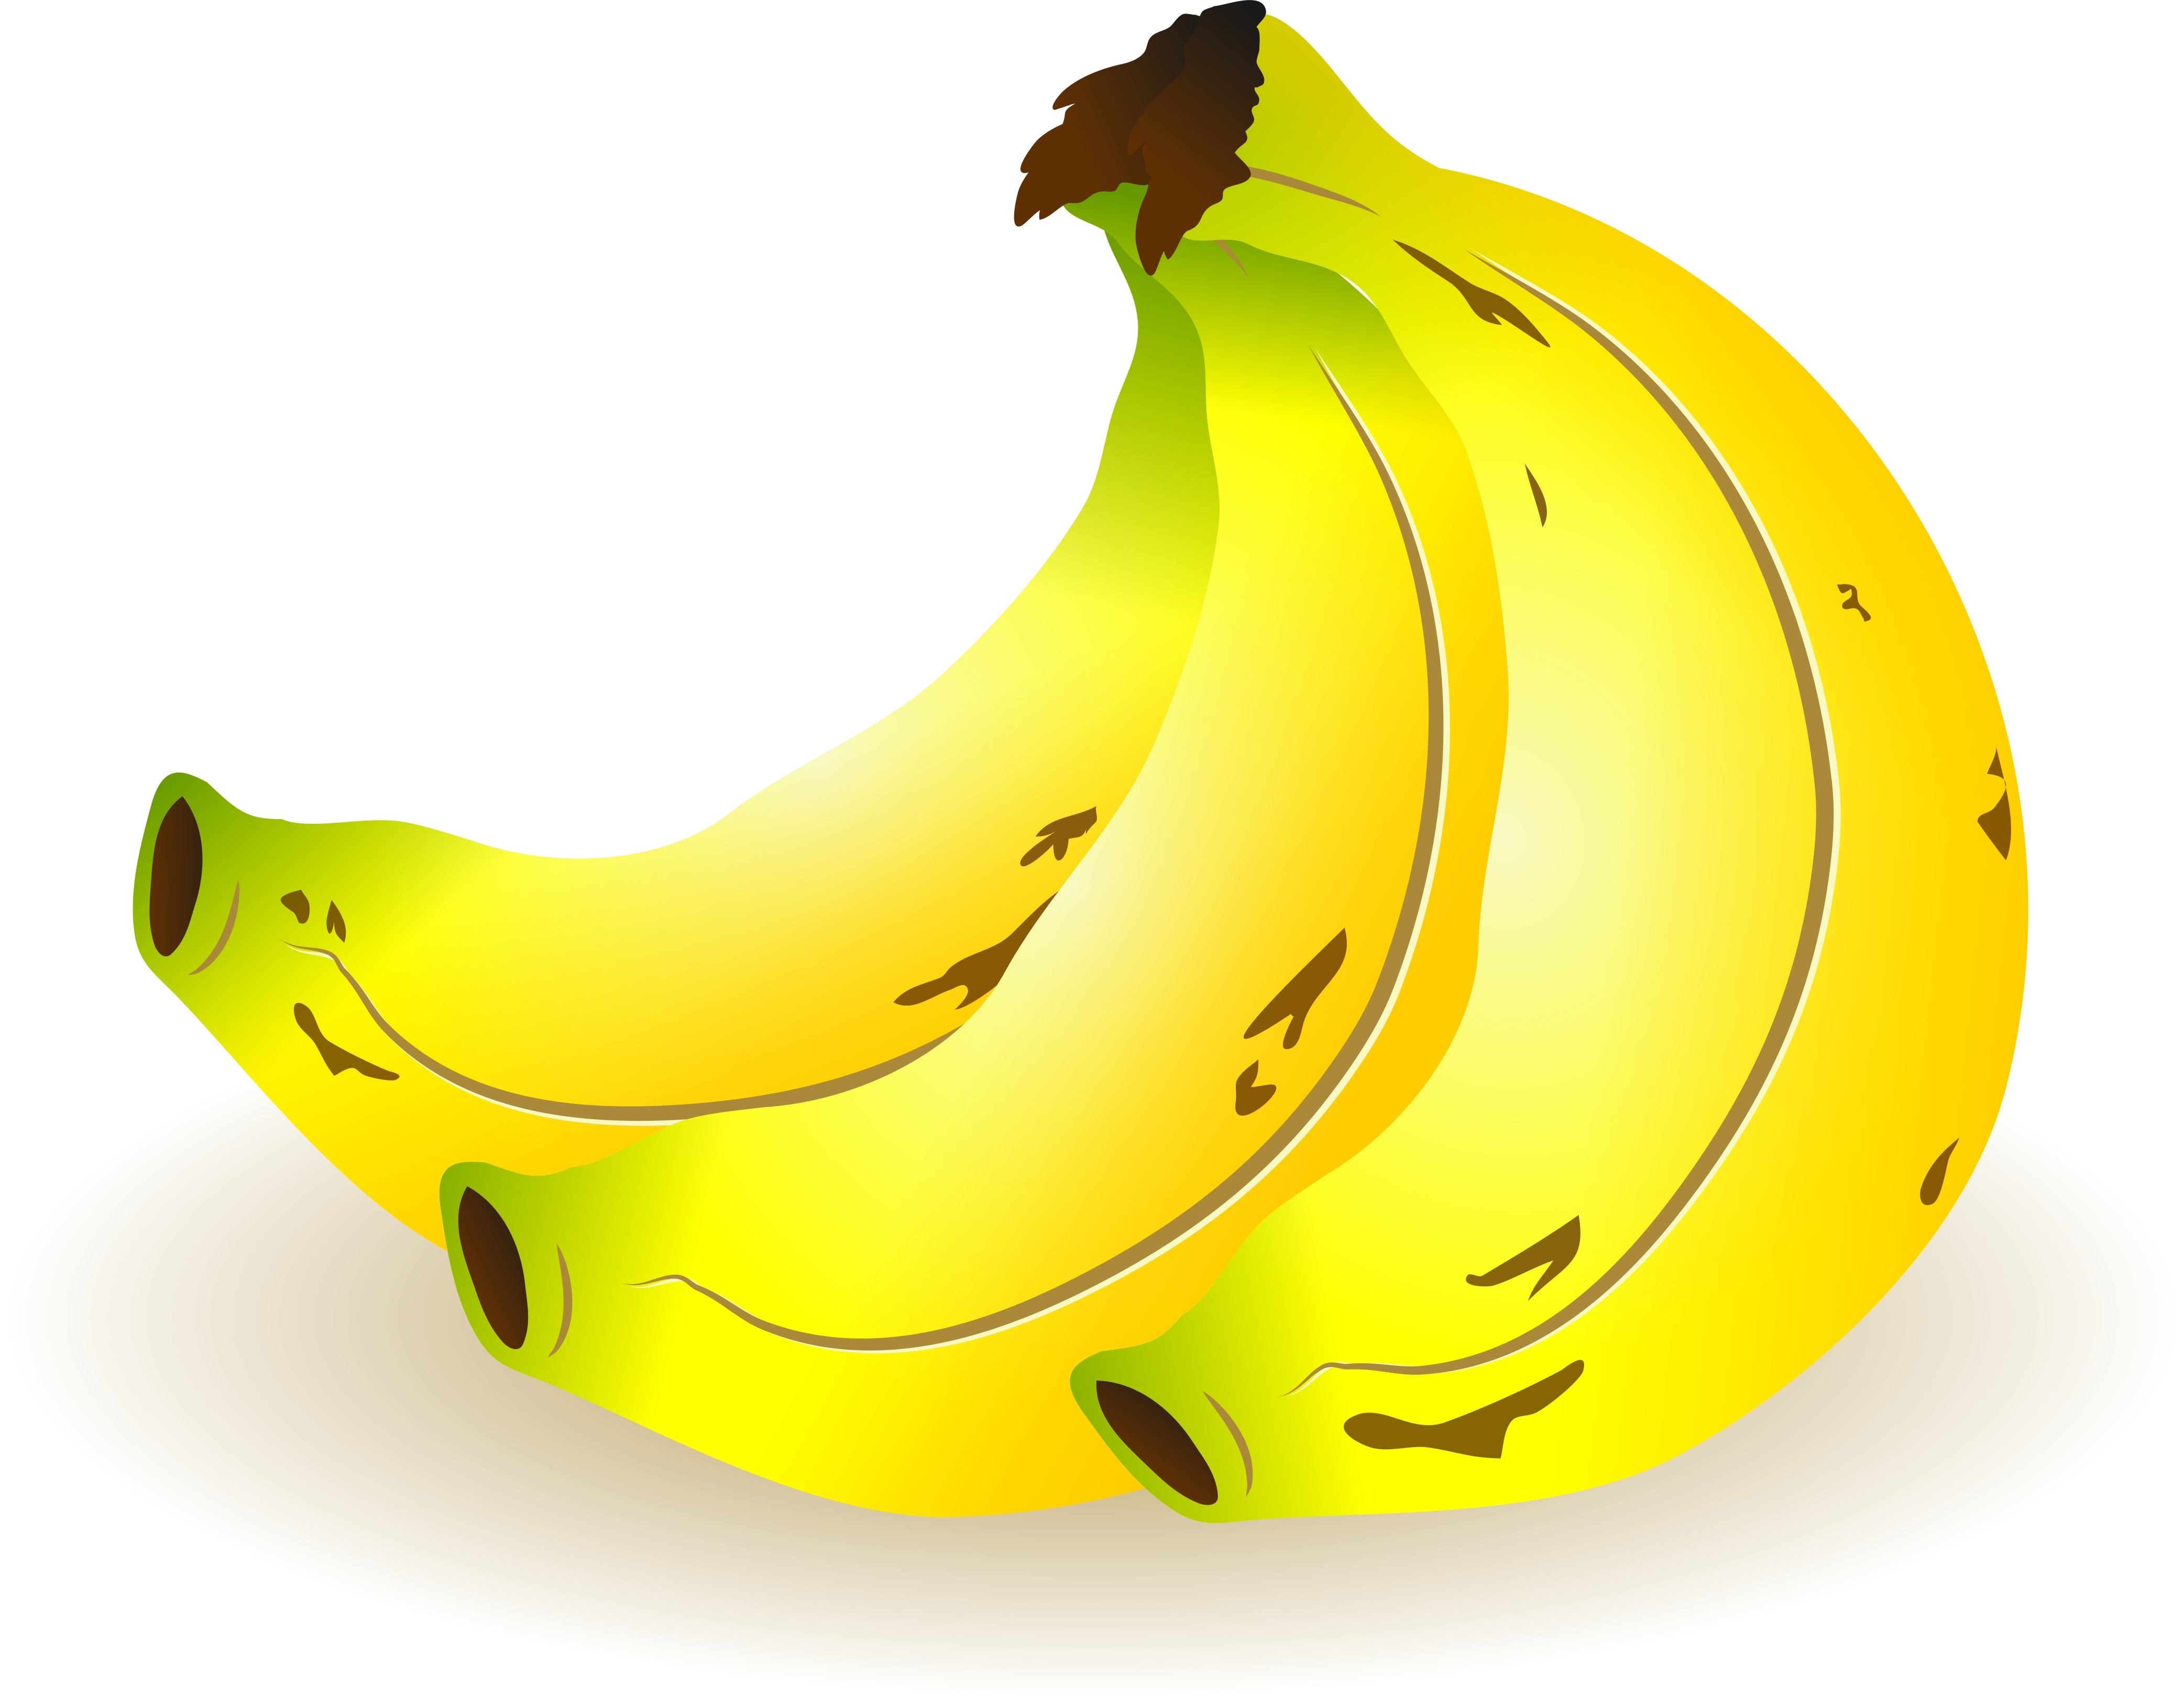 Bunch Of Bananas image - vector clip art online, royalty free 